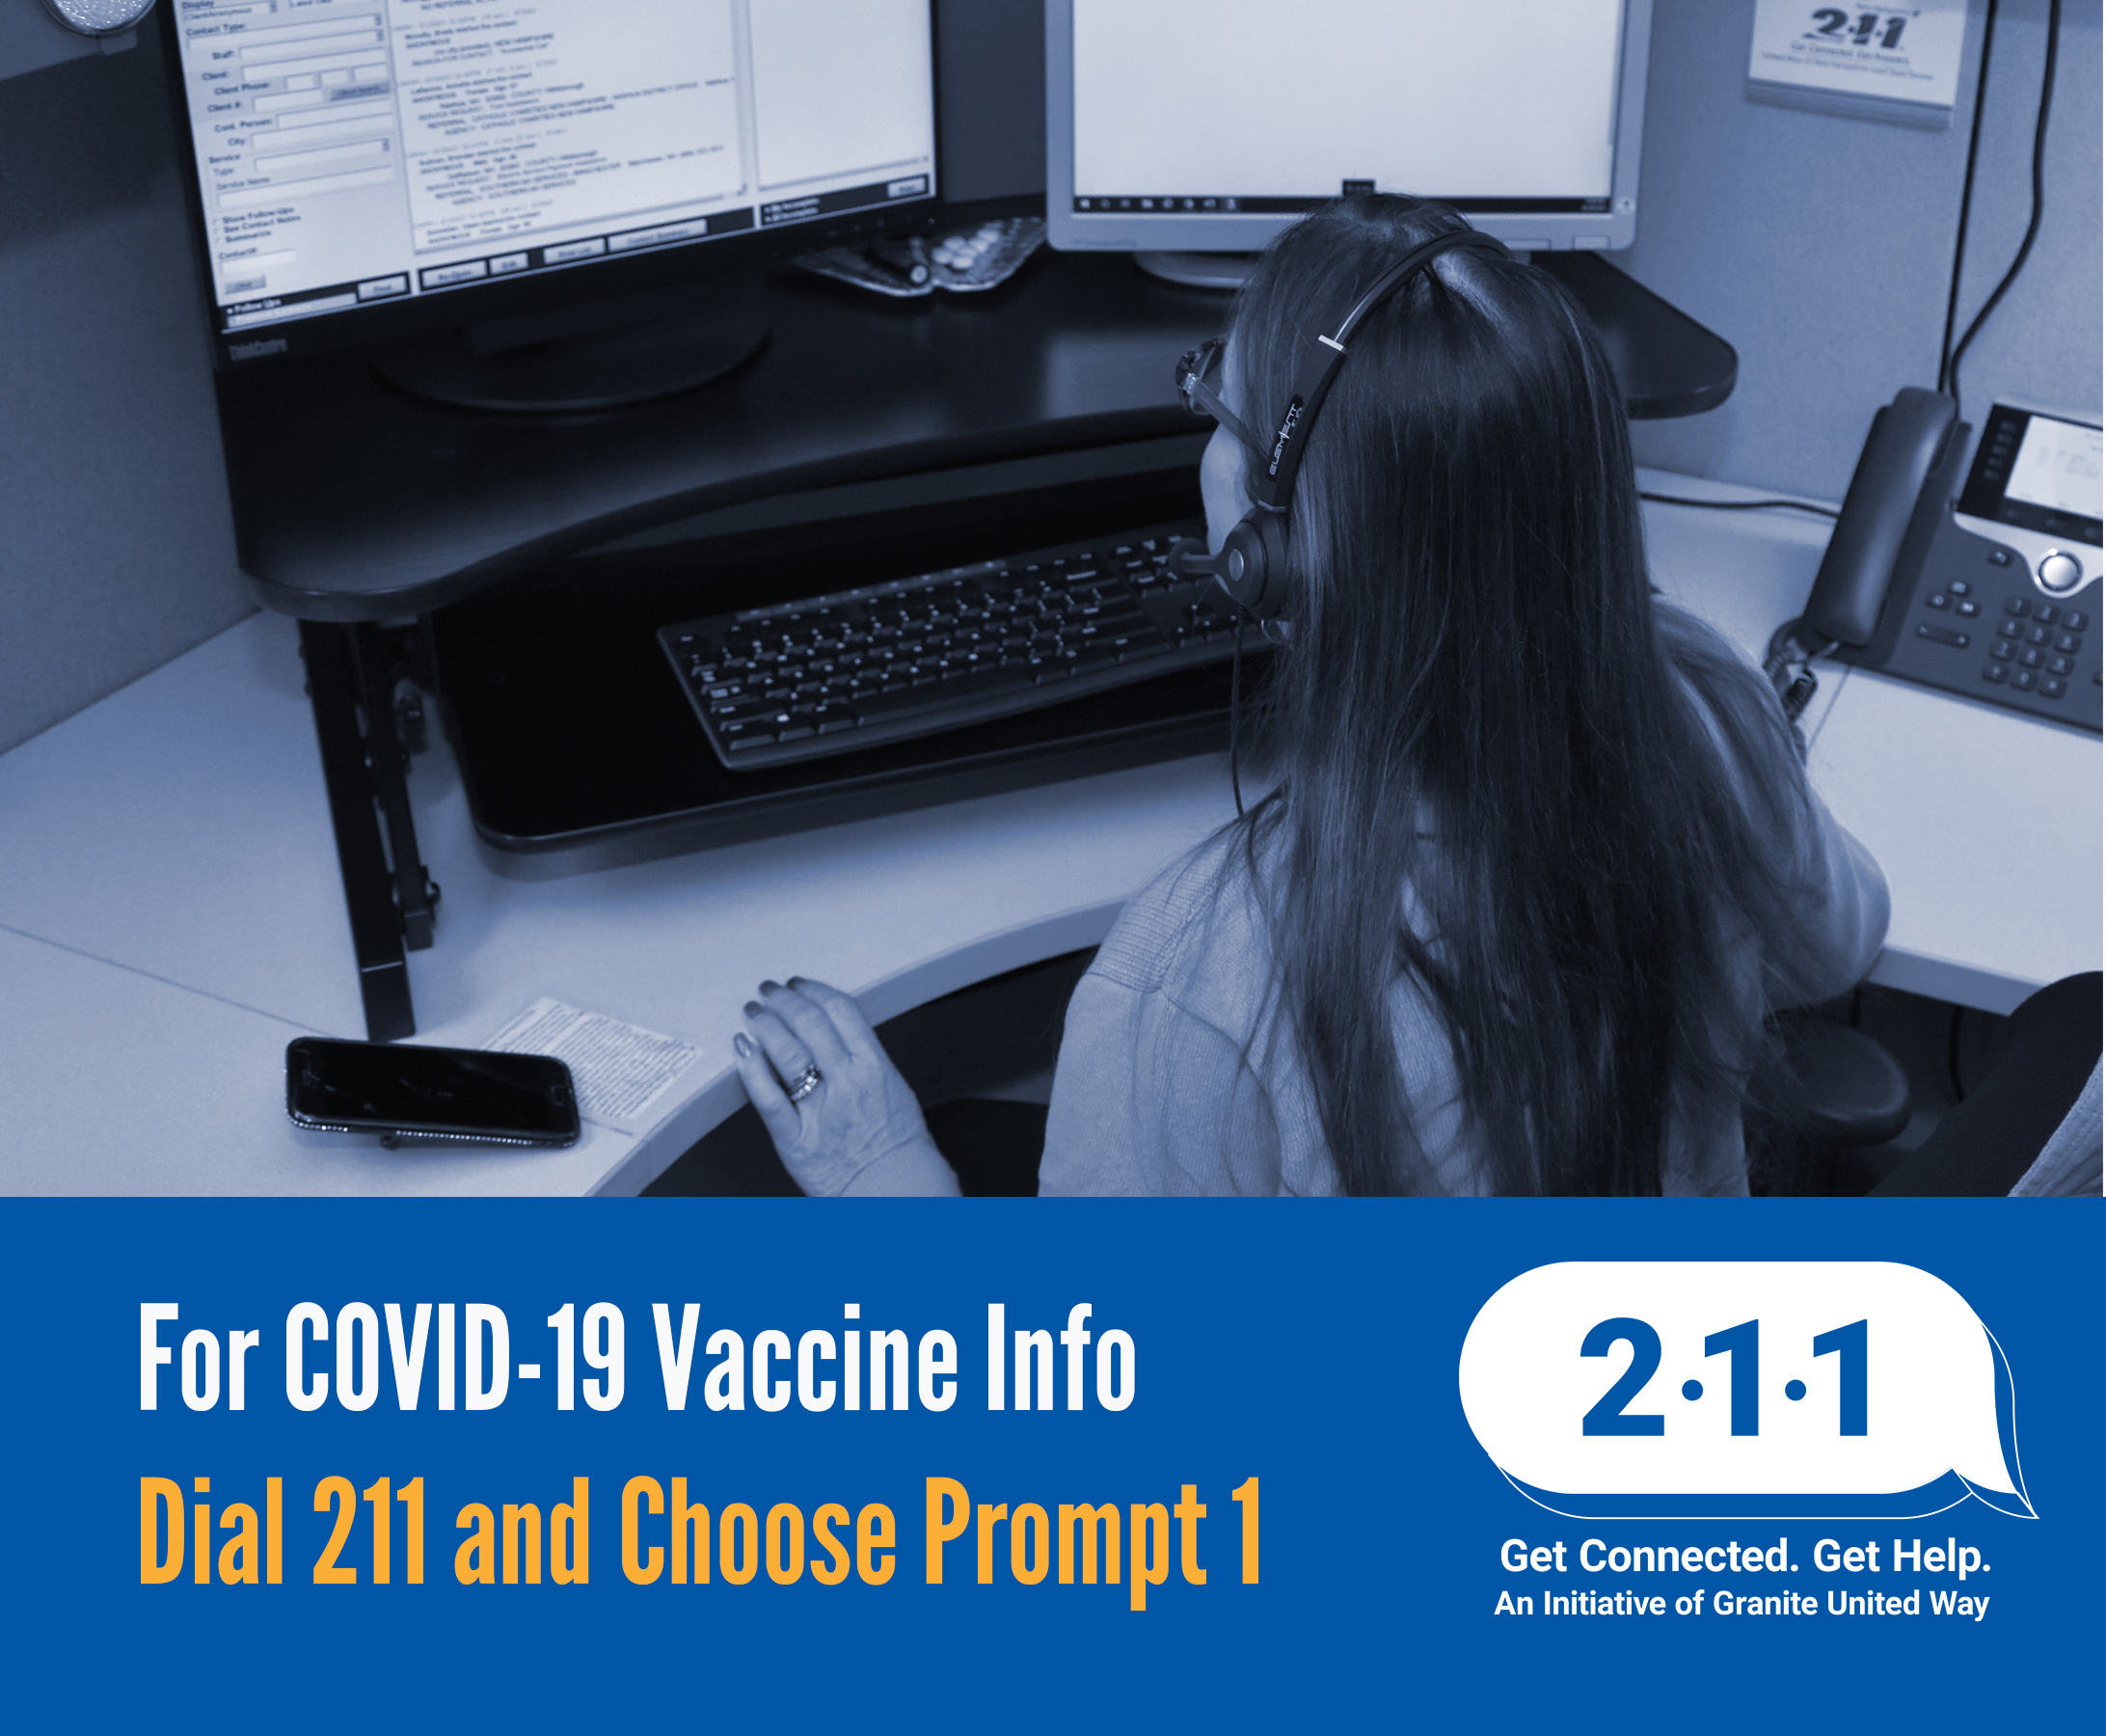 NH Residents Seeking Information on COVID-19 Vaccine